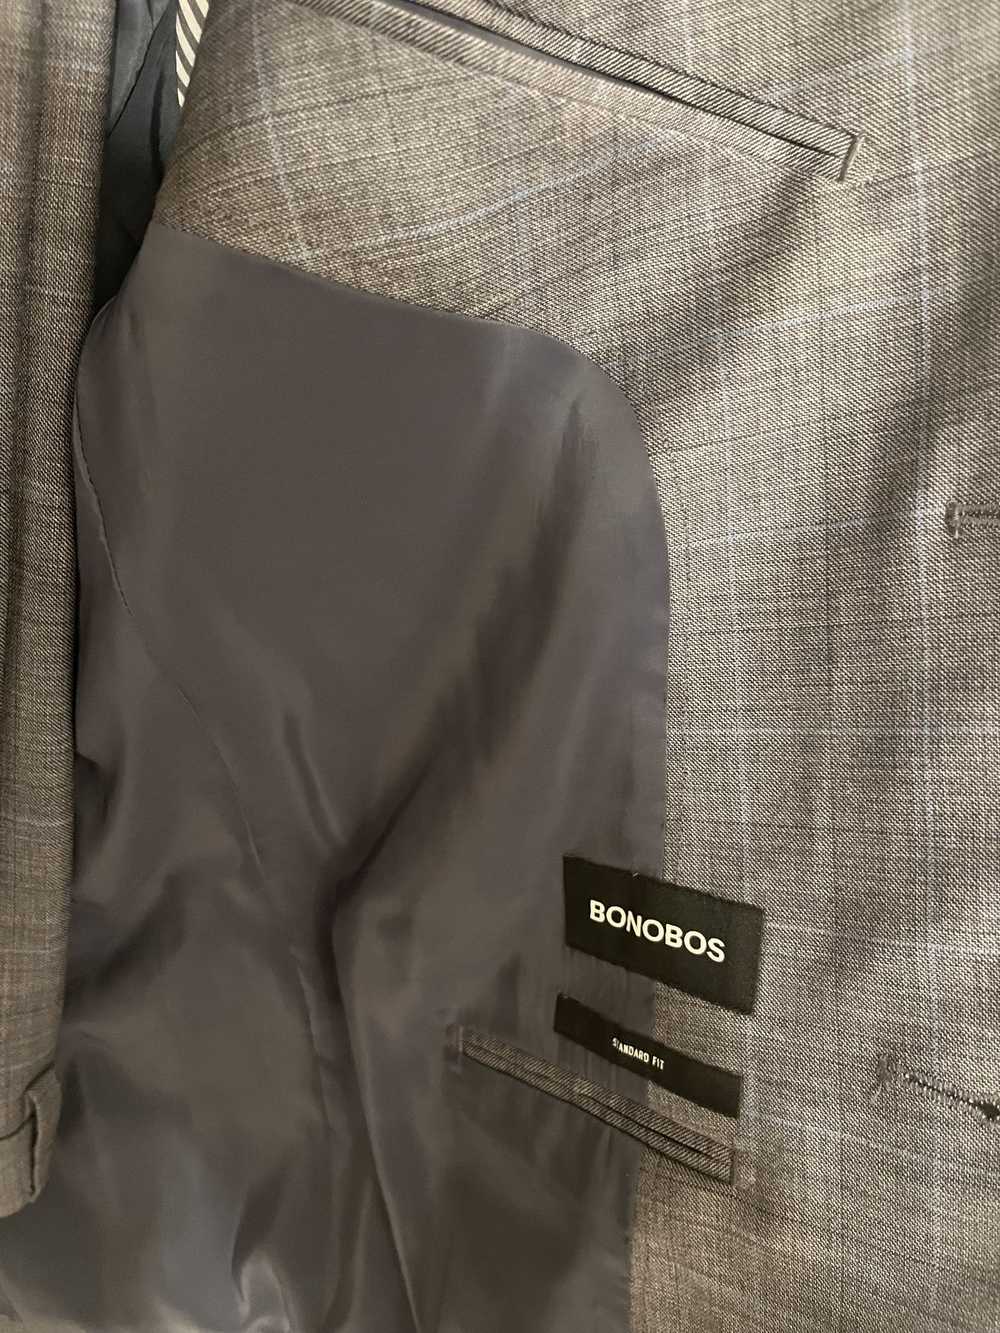 Bonobos Bonobos Standard Fit Wool Stretch Suit - image 4